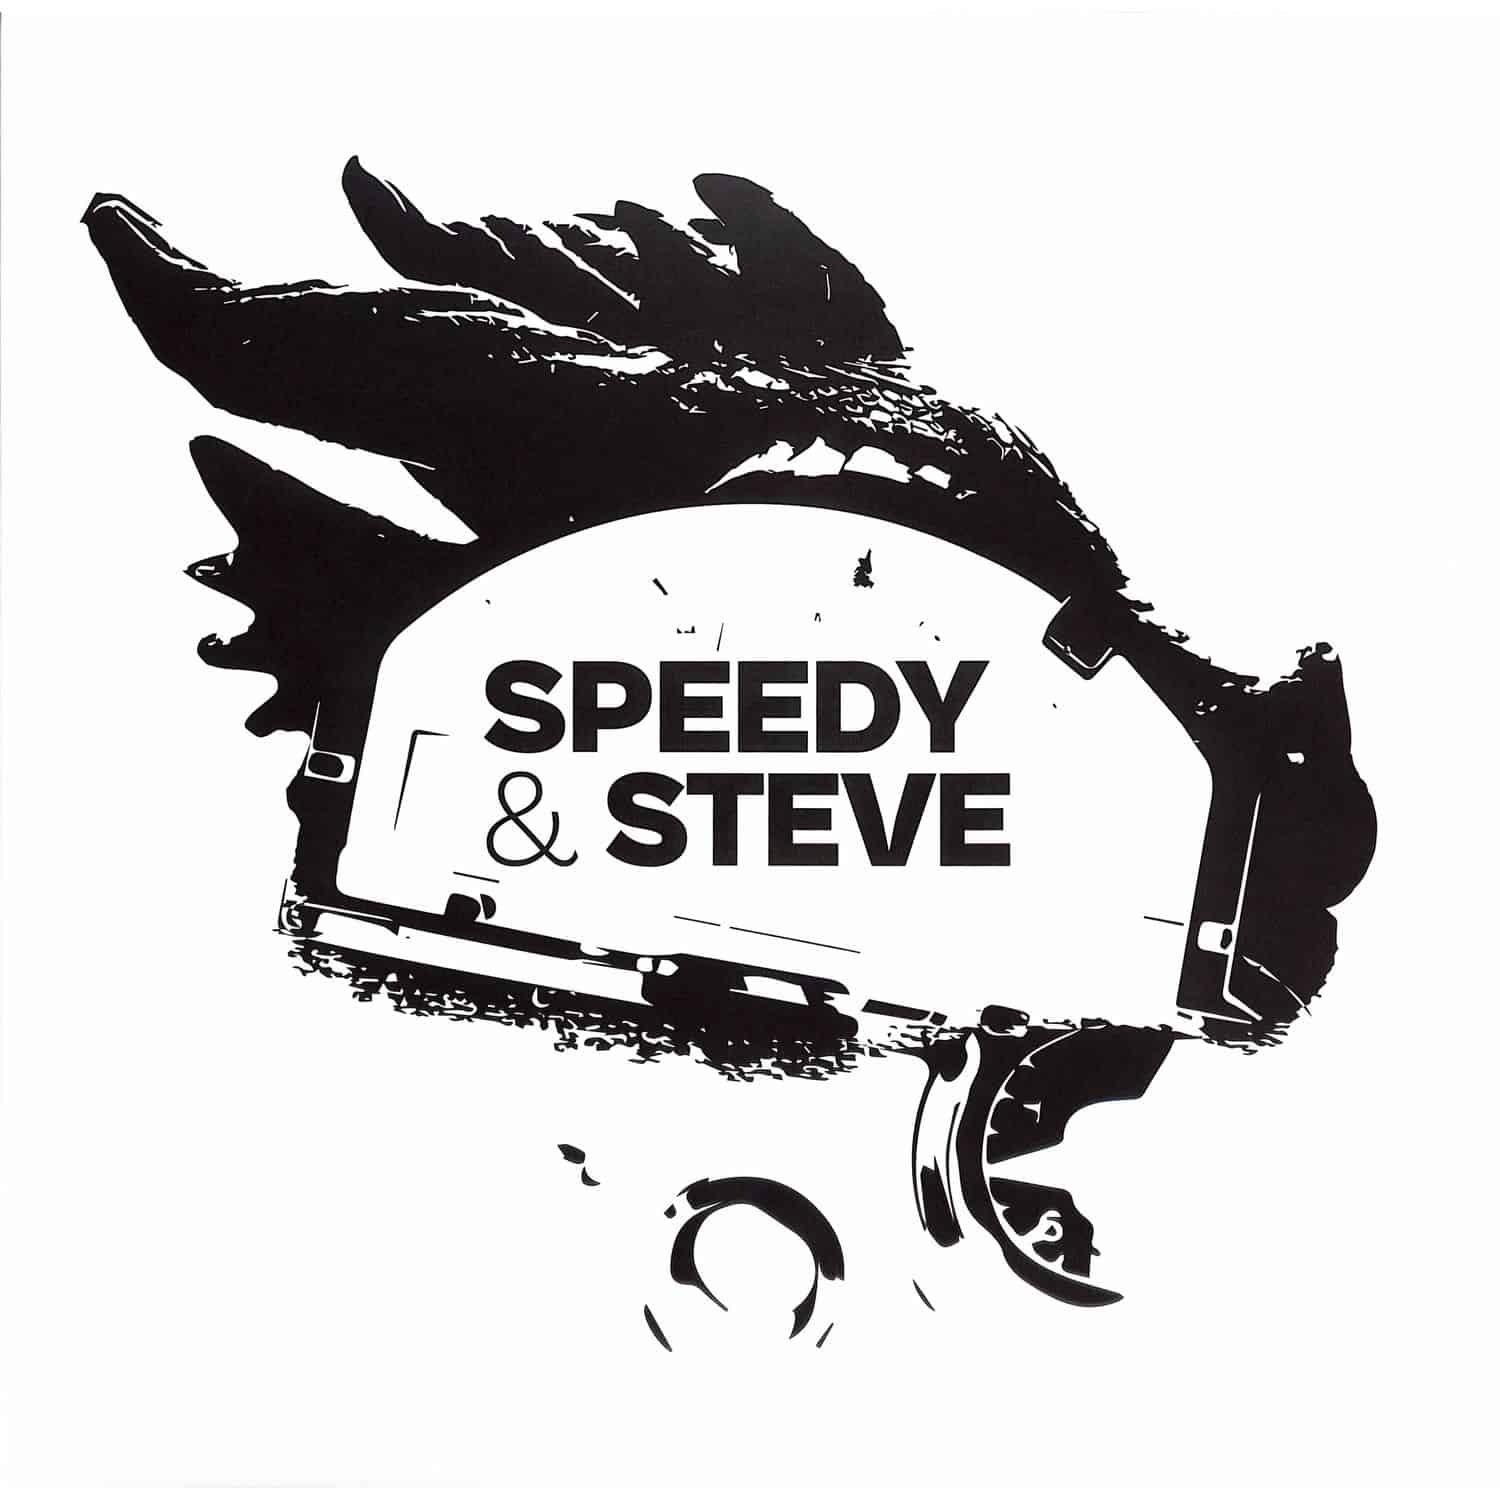 Speedy & Steve - SPEEDY & STEVE